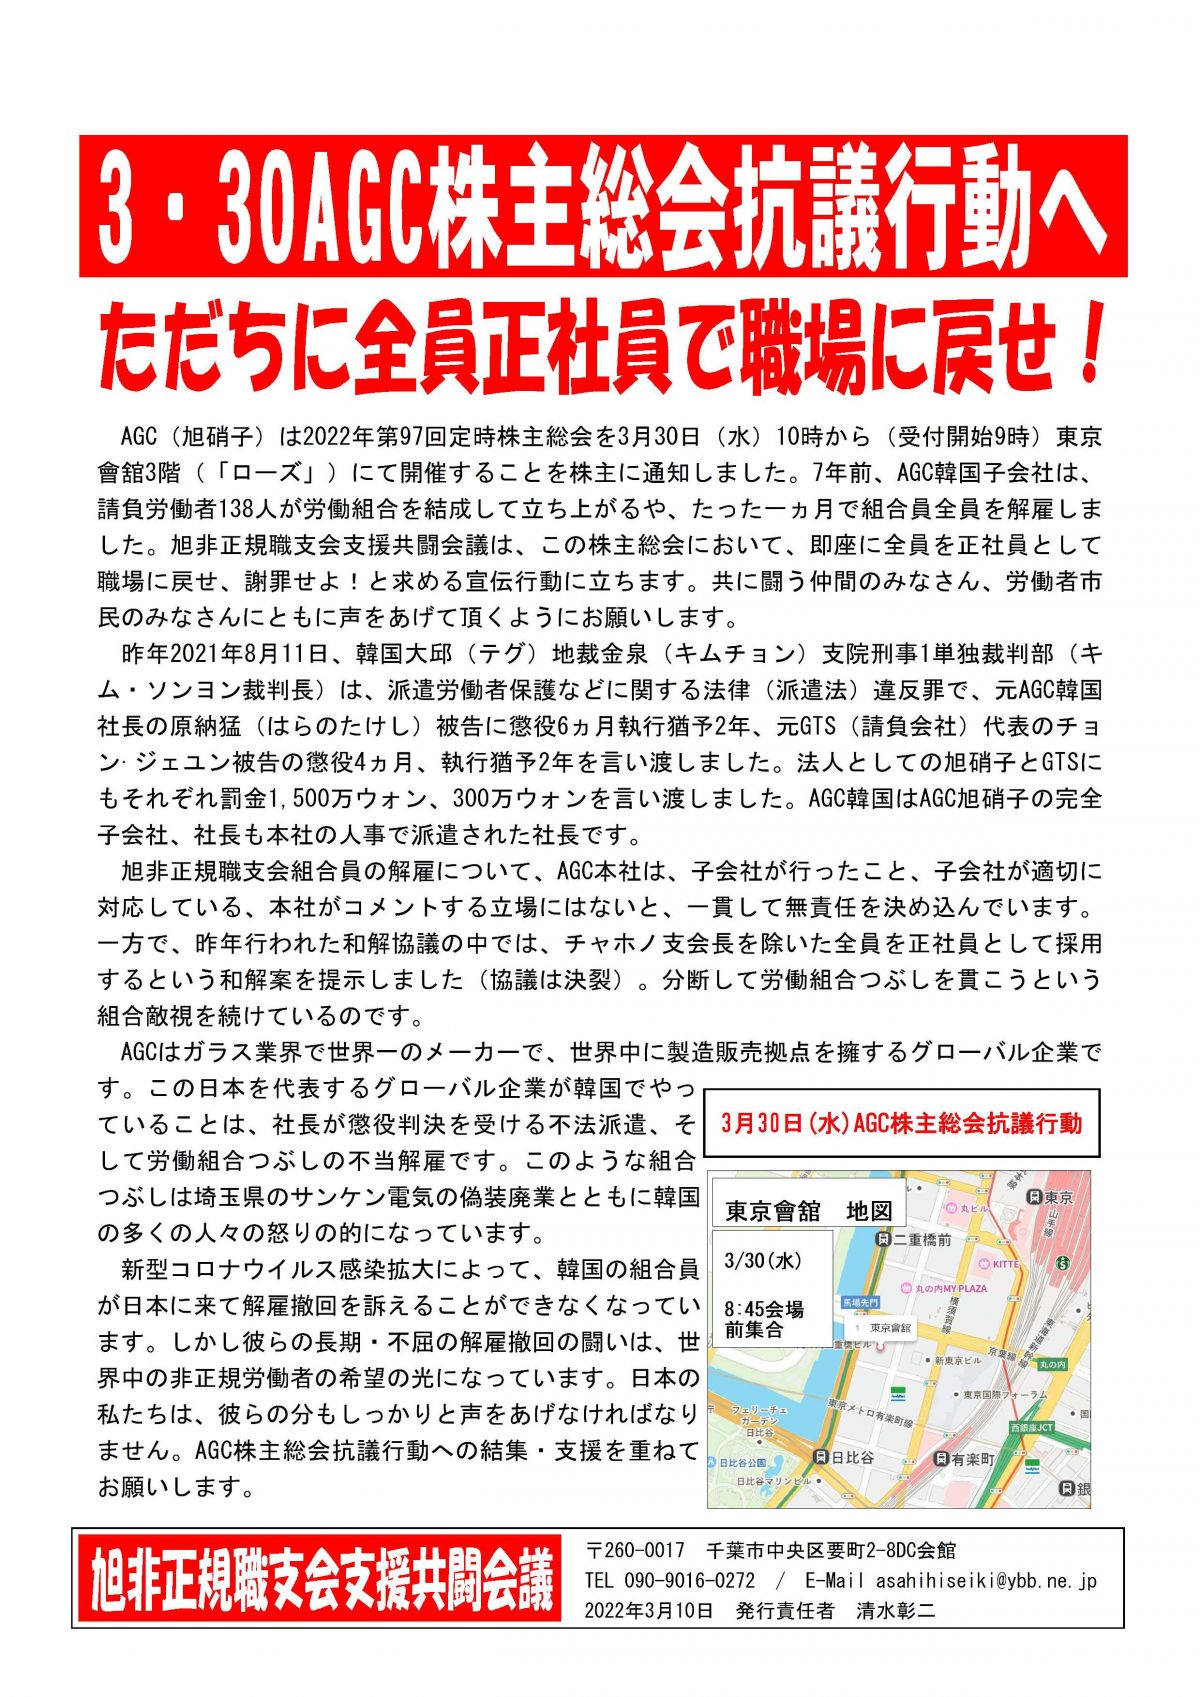 3･30AGC株主総会抗議行動へ